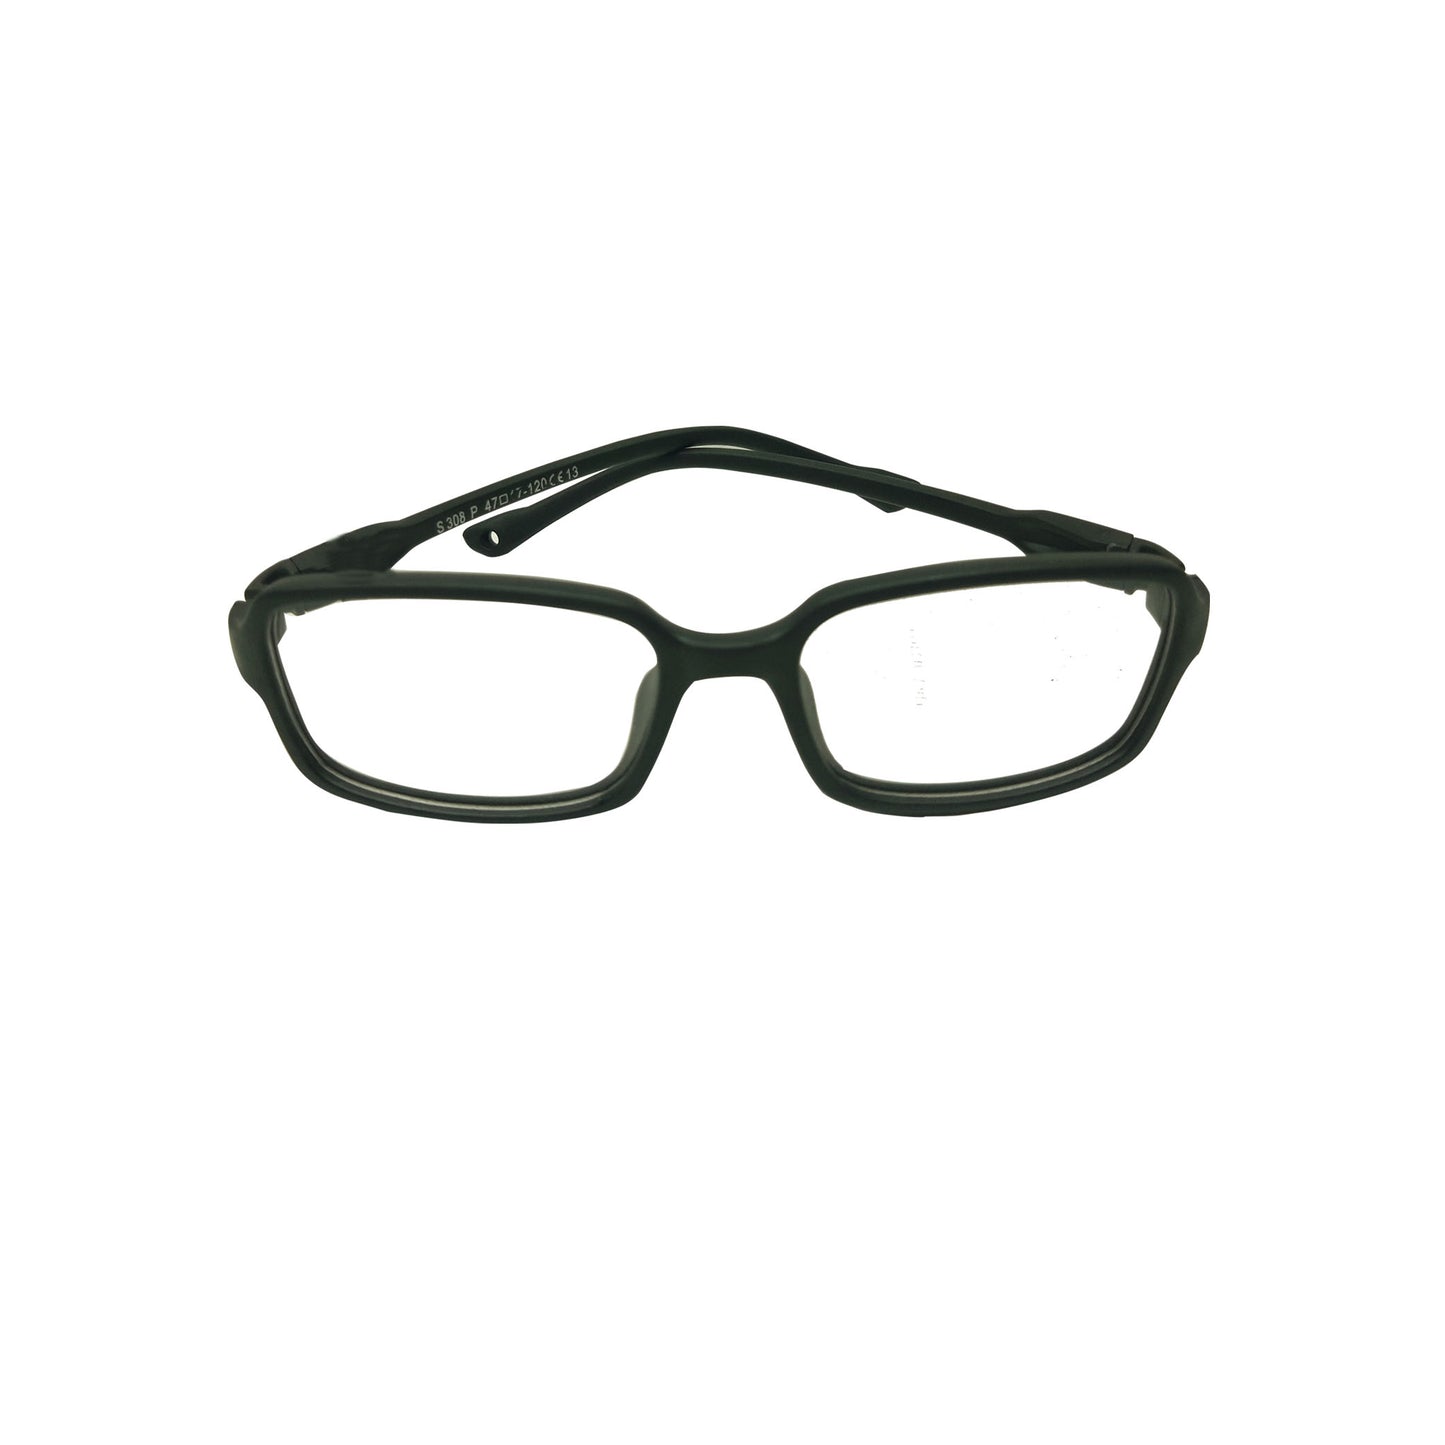 DLR KIDS 308 C13 (Medium Size Eyewear)